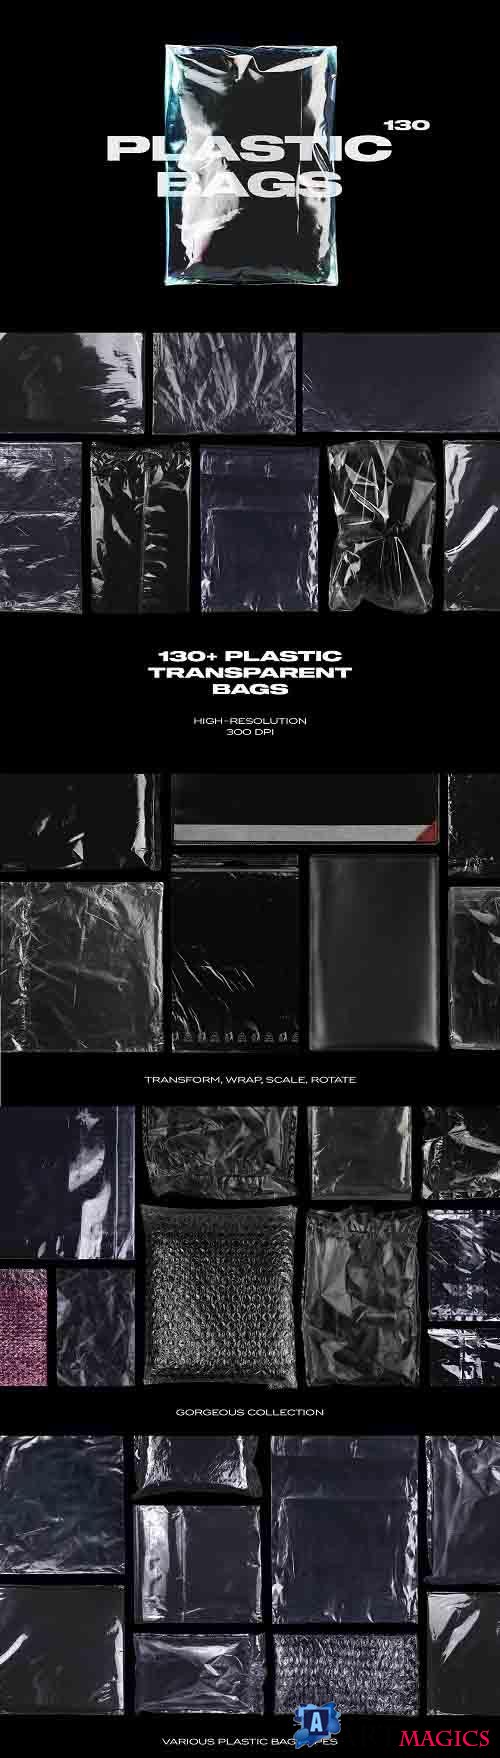 Plastic Bags Texture Branding Bundle - 5753364